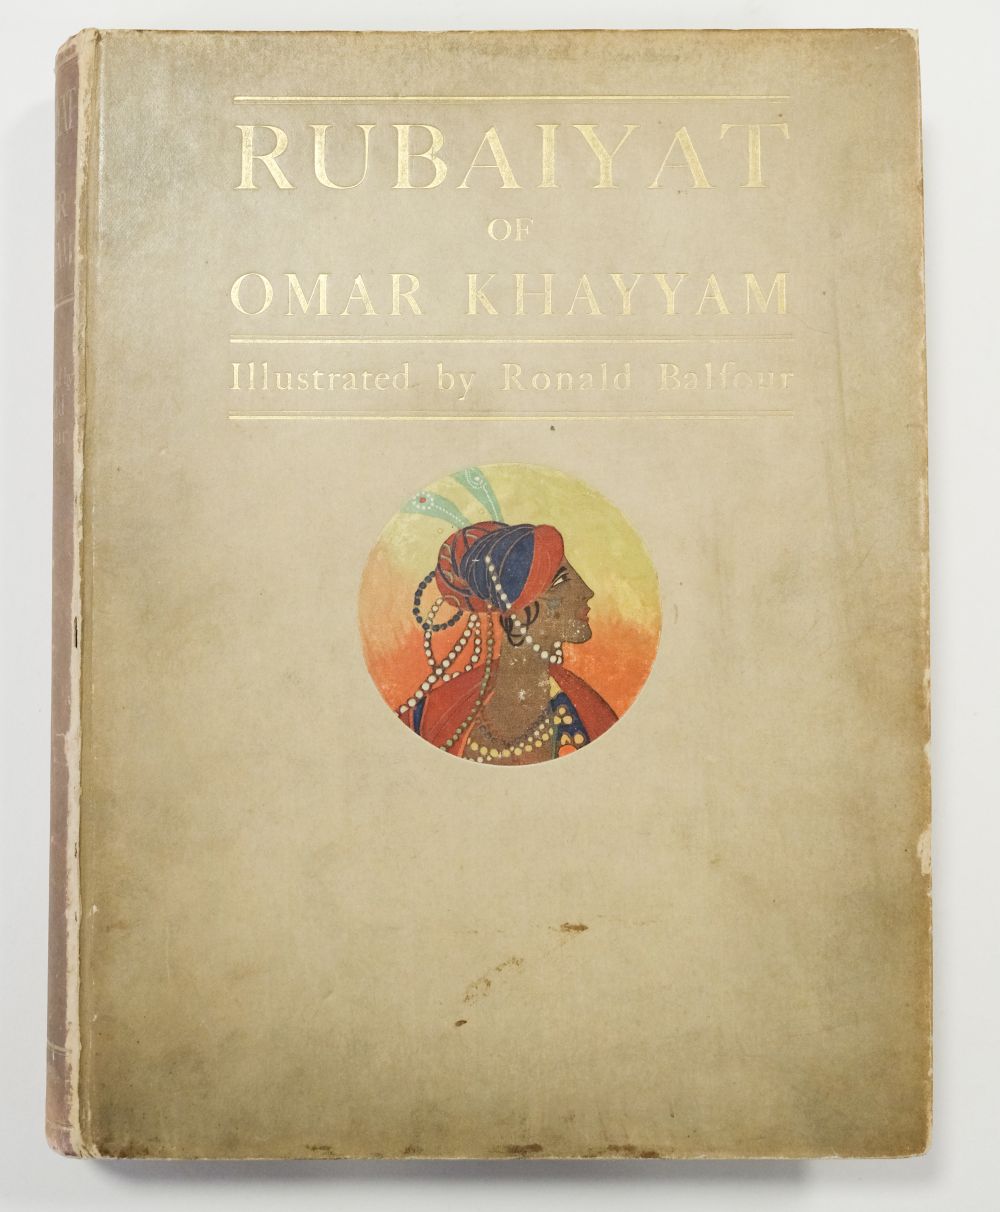 Bull (René, illust). Rubaiyat of Omar Khayyam, translated by Edward Fitzgerald,[1910] - Image 9 of 12